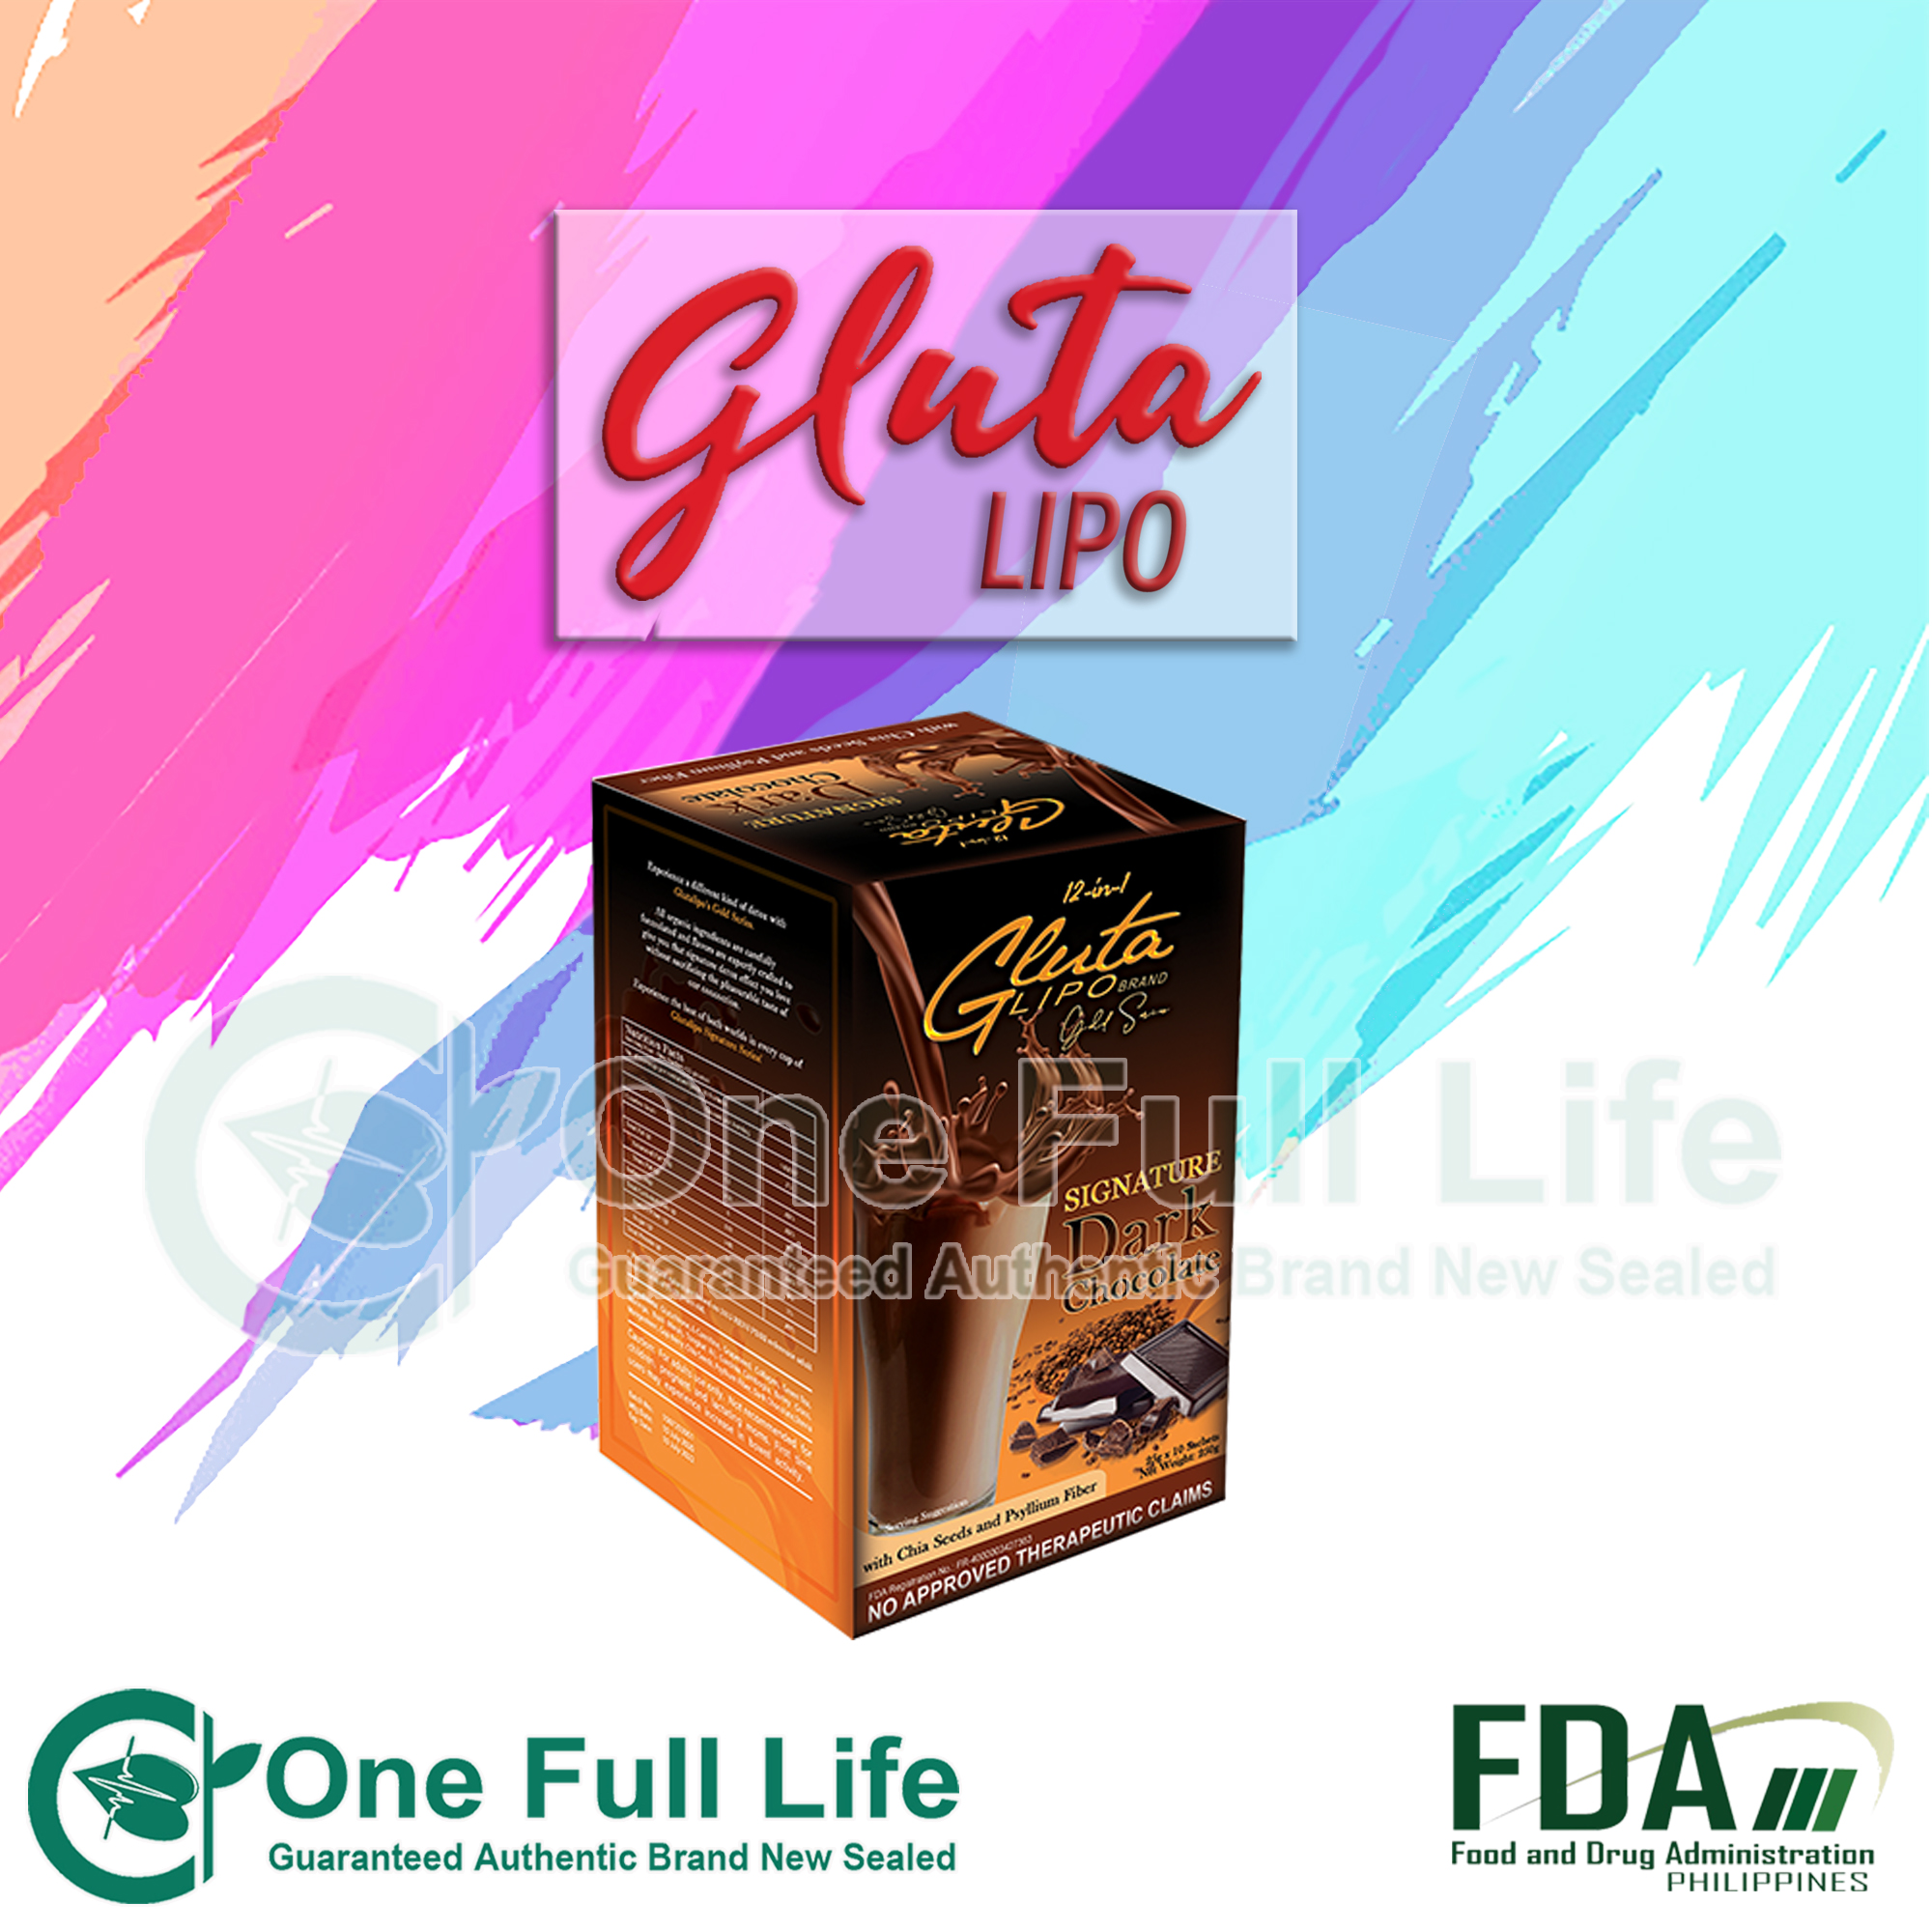 Gluta Lipo GlutaLipo Gold Series Signature DARK CHOCOLATE 1 Box 